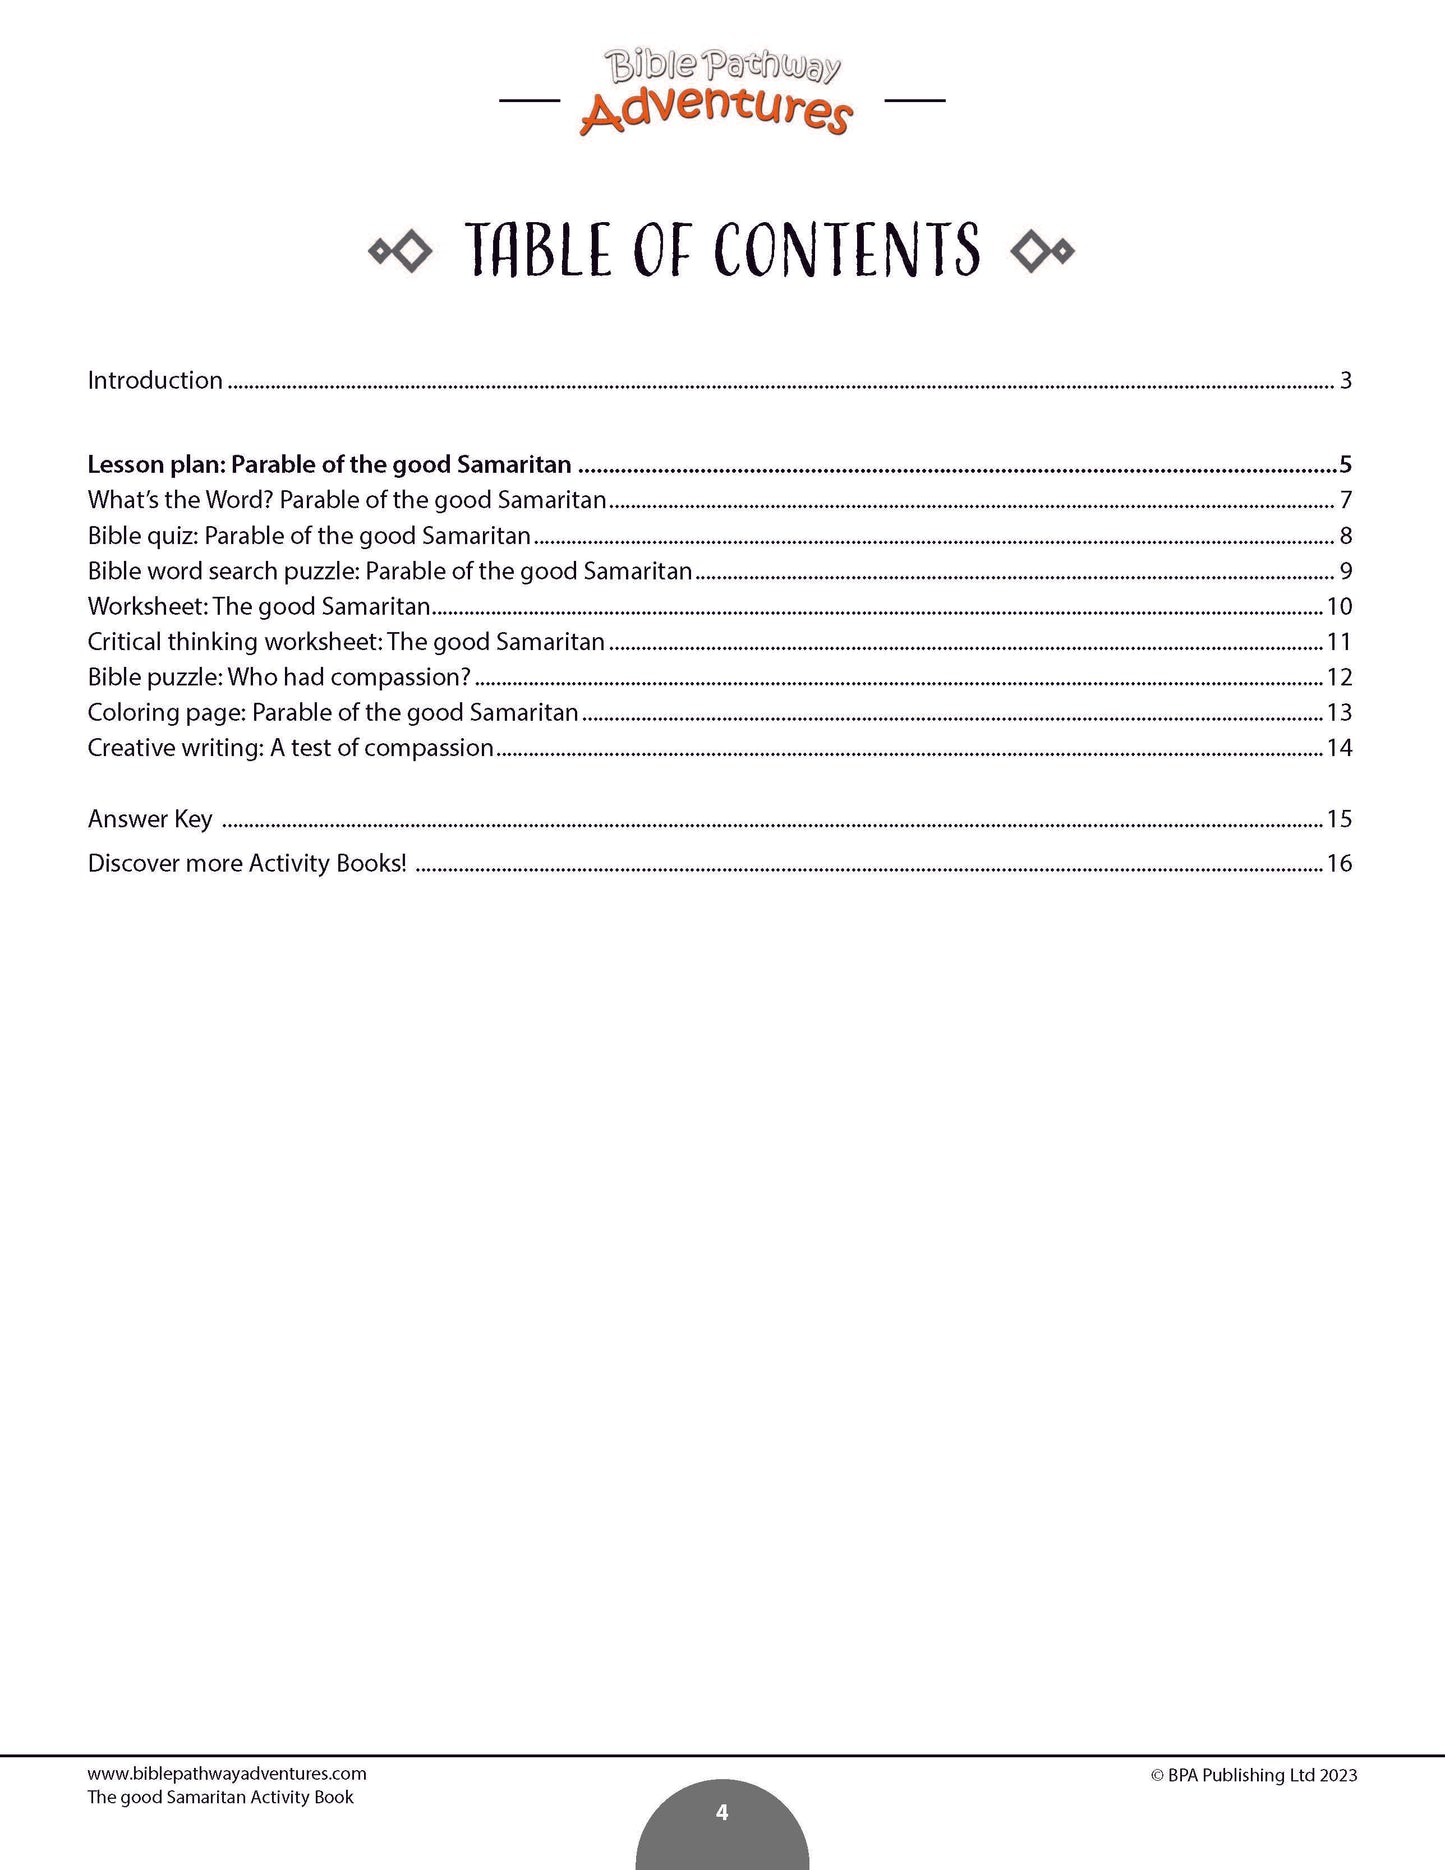 Parable of the Good Samaritan Activity Book (PDF)